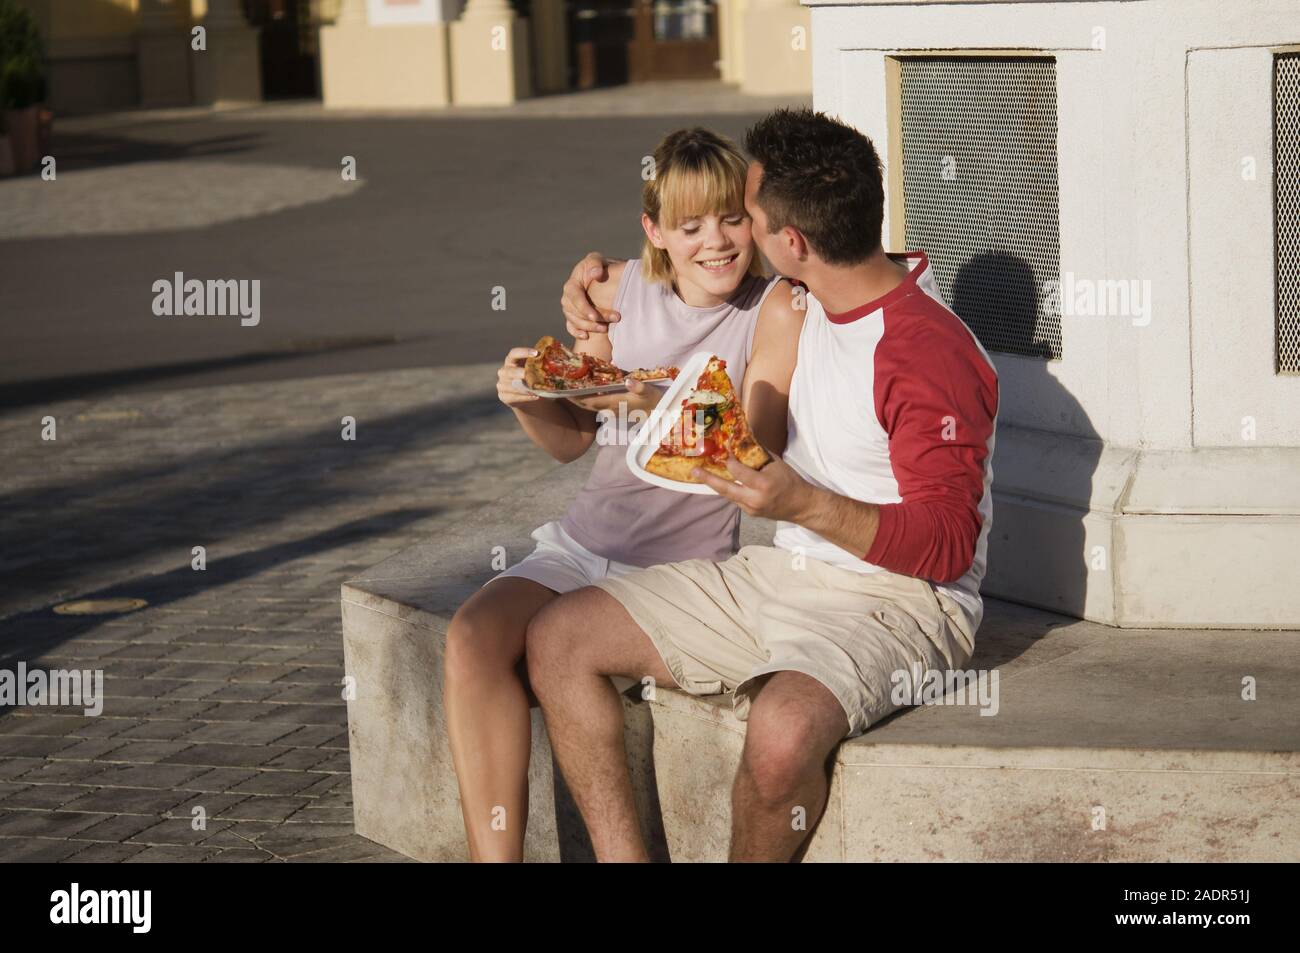 Junges Paar isst eine Pizzaschnitte - Coppia giovane mangiare la pizza all'aperto Foto Stock